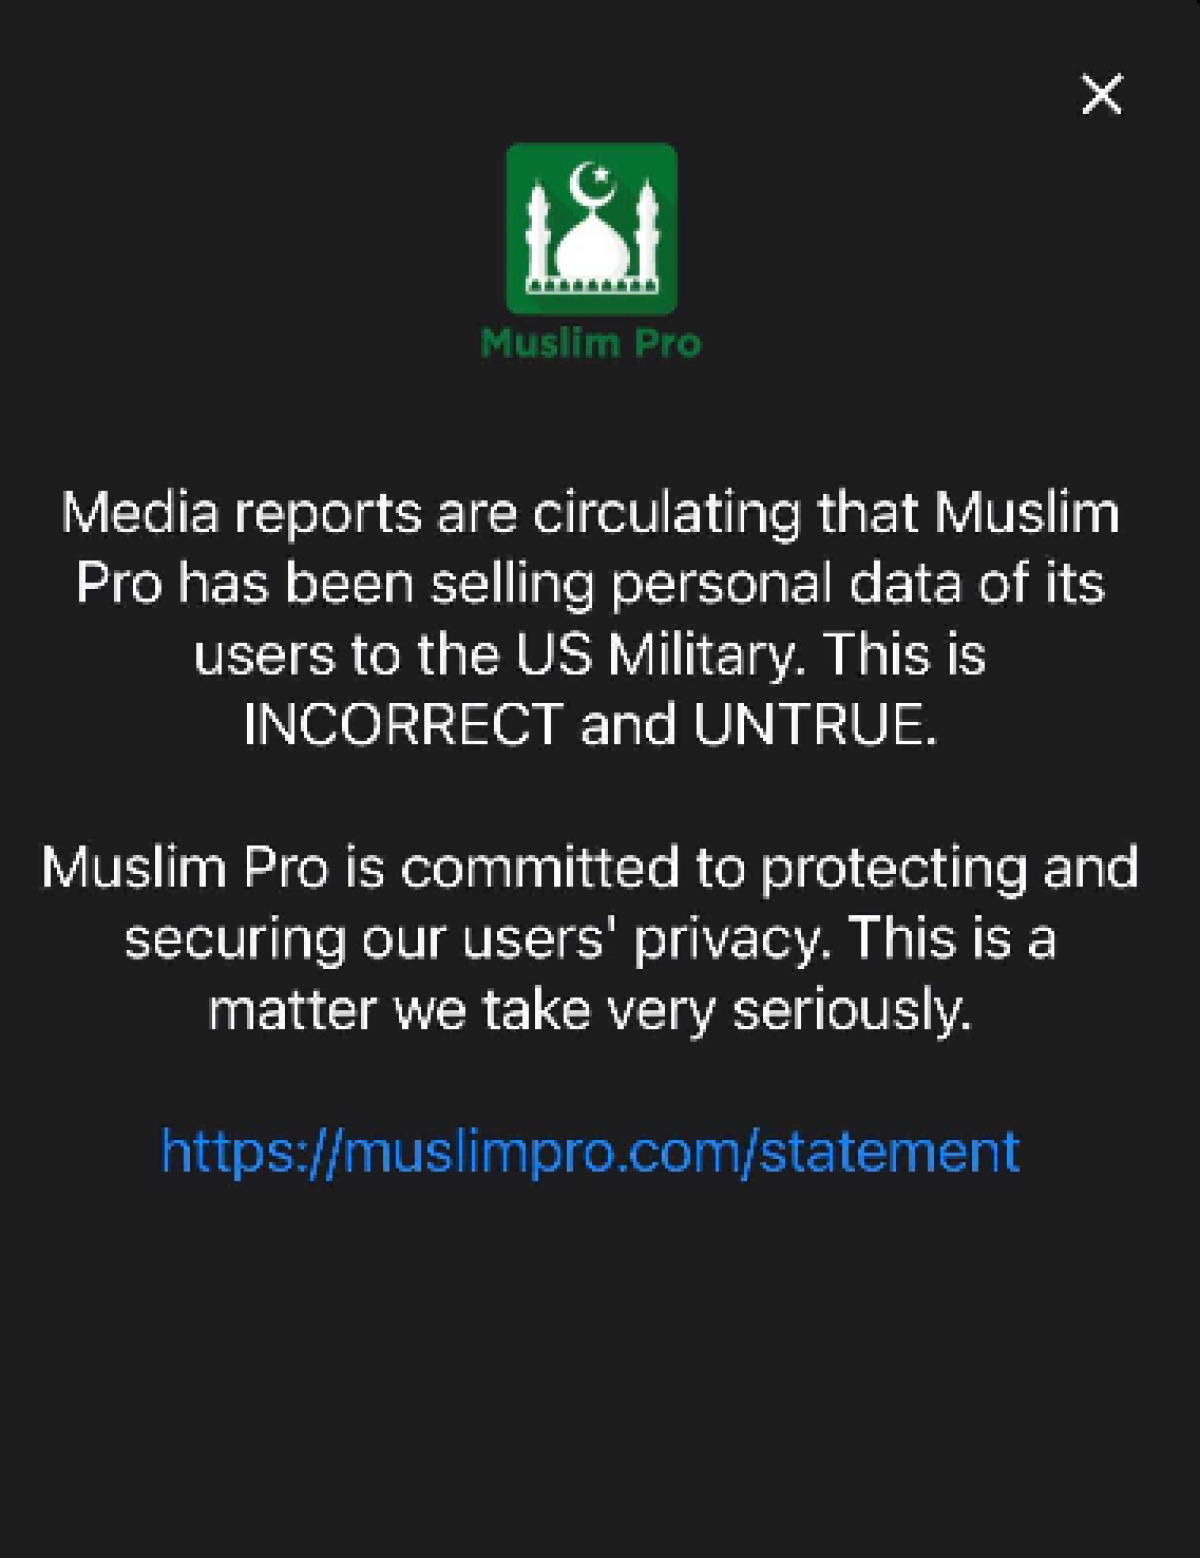 Screenshot of company statement in Muslim Pro app.